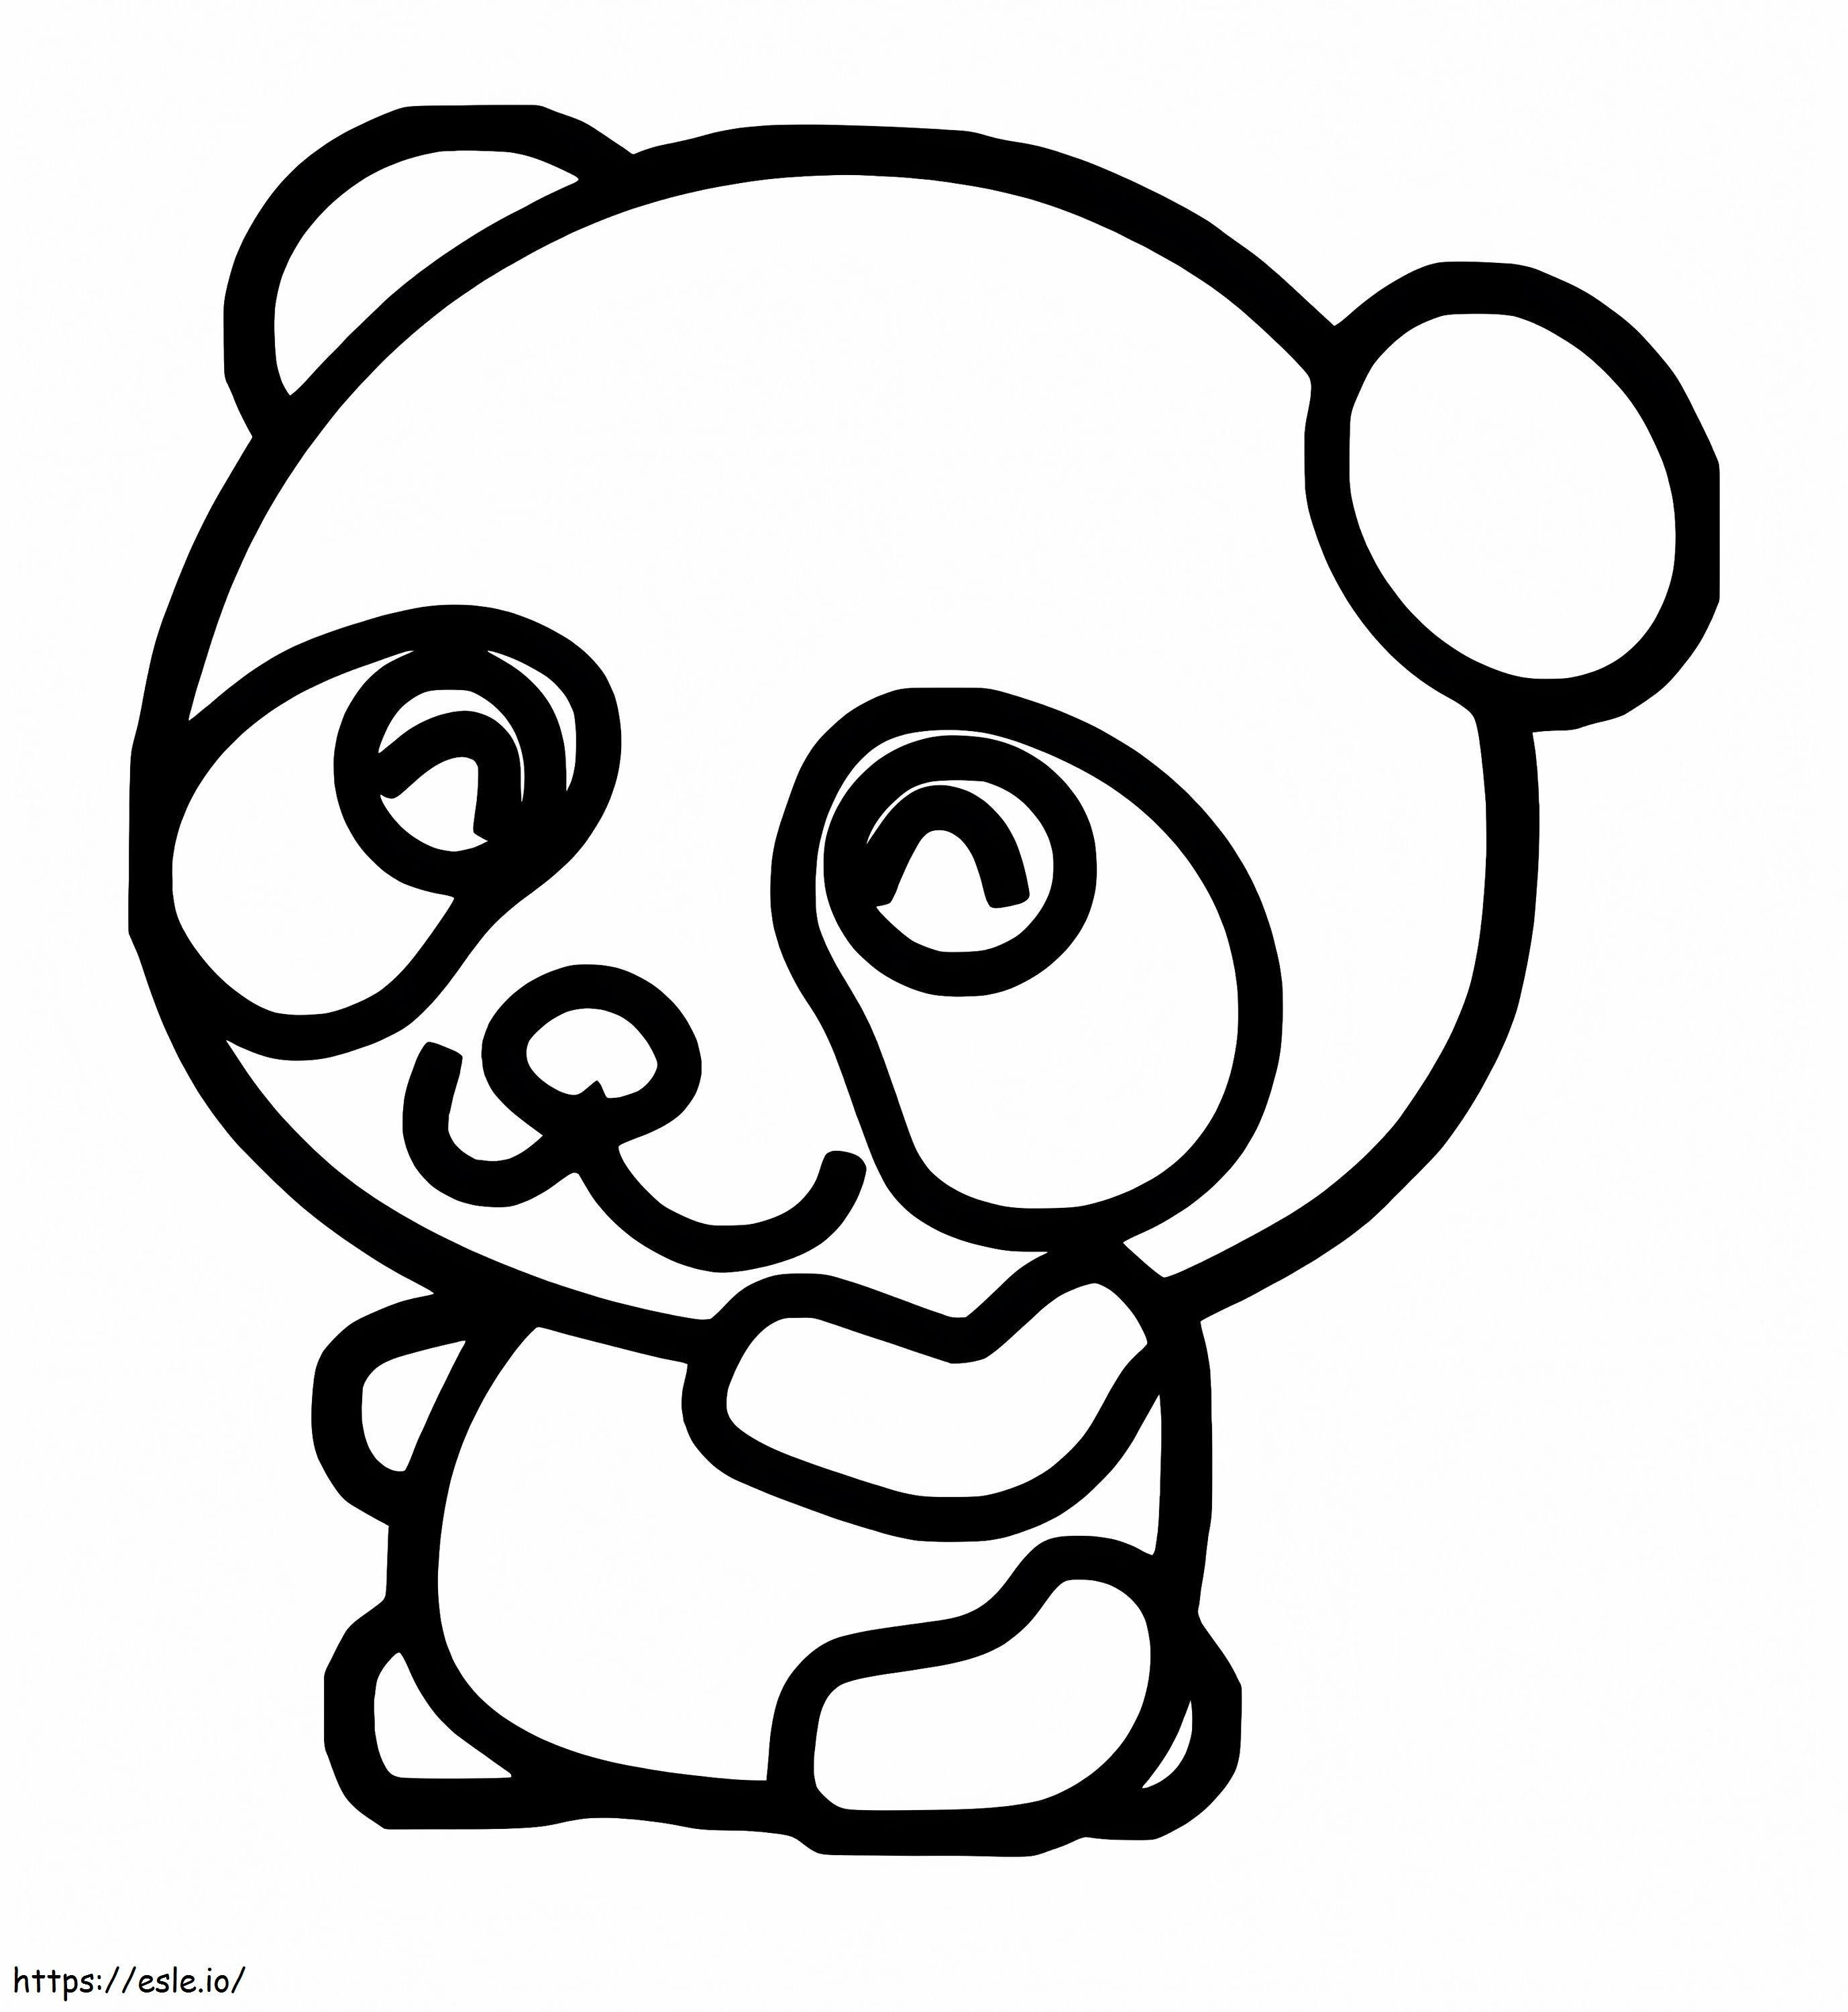 Desenhando o Pequeno Panda para colorir